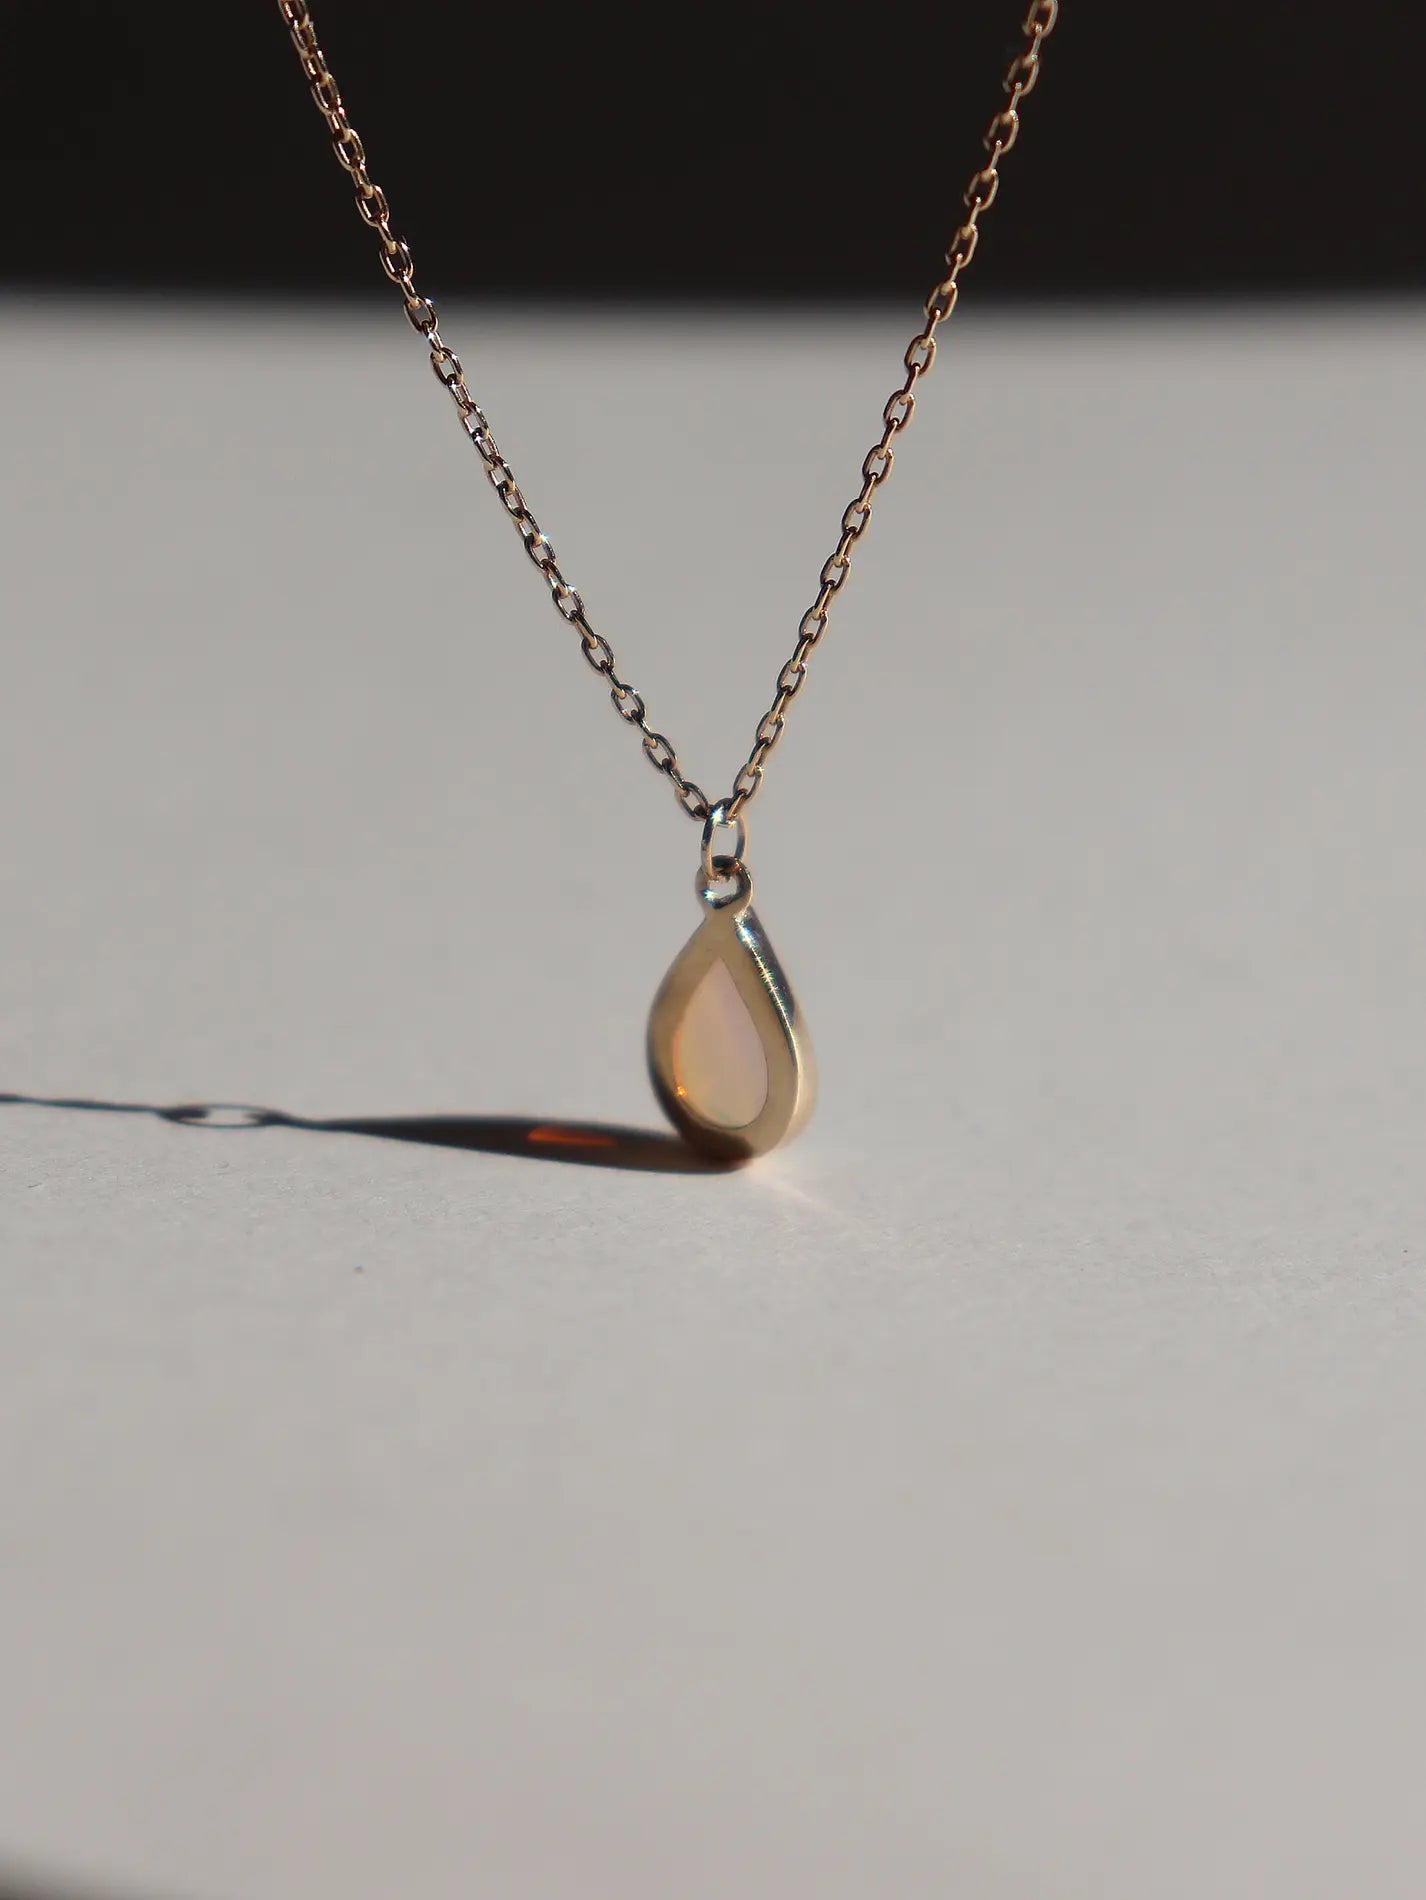 Opal tear drop necklace